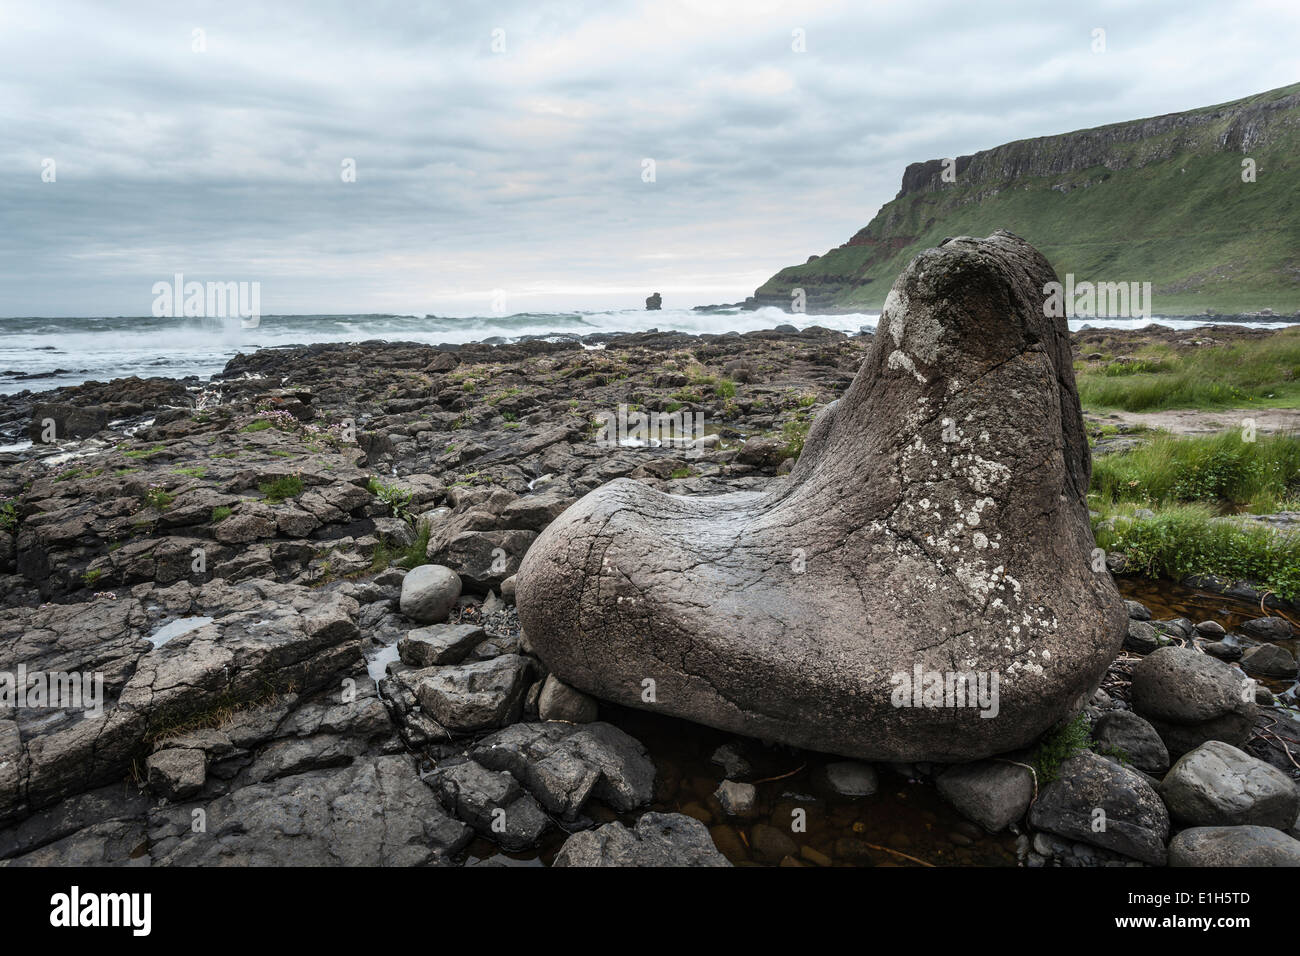 Giants foot, Giants Causeway, Bushmills, County Antrim, Northern Ireland, UK Stock Photo